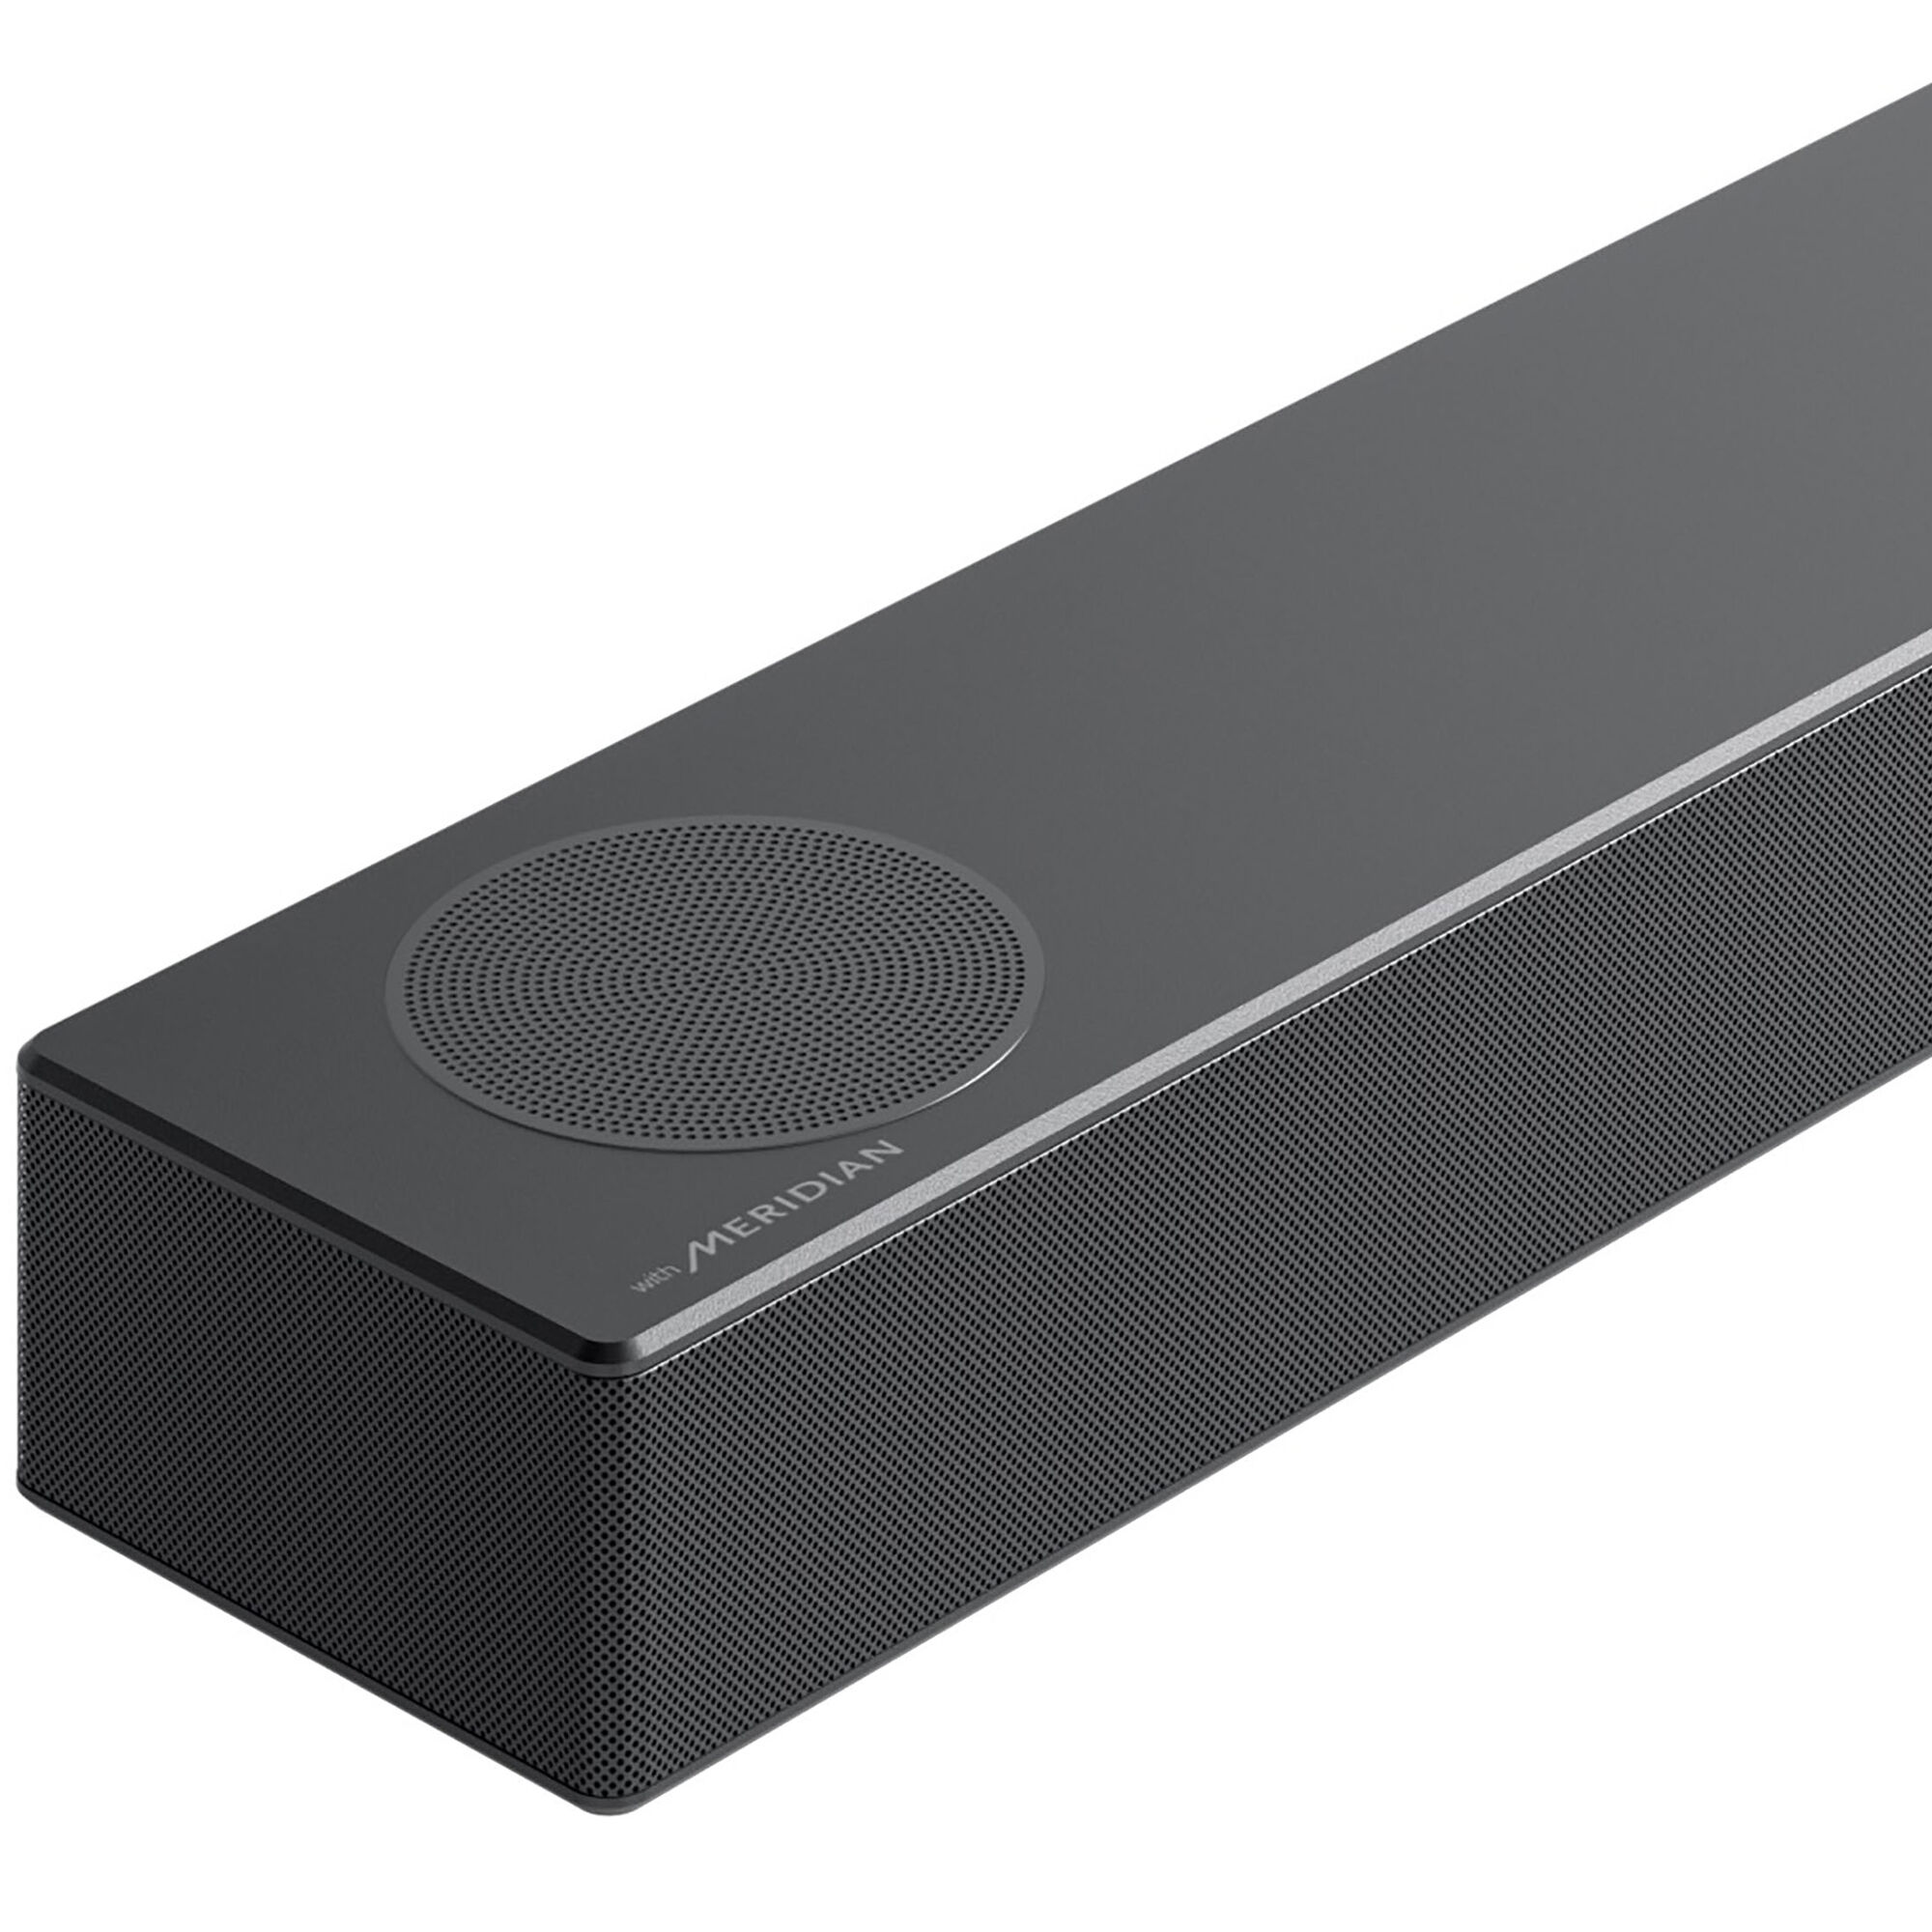 LG - 3.1ch Dolby Atmos Soundbar with Wireless Subwoofer - Black